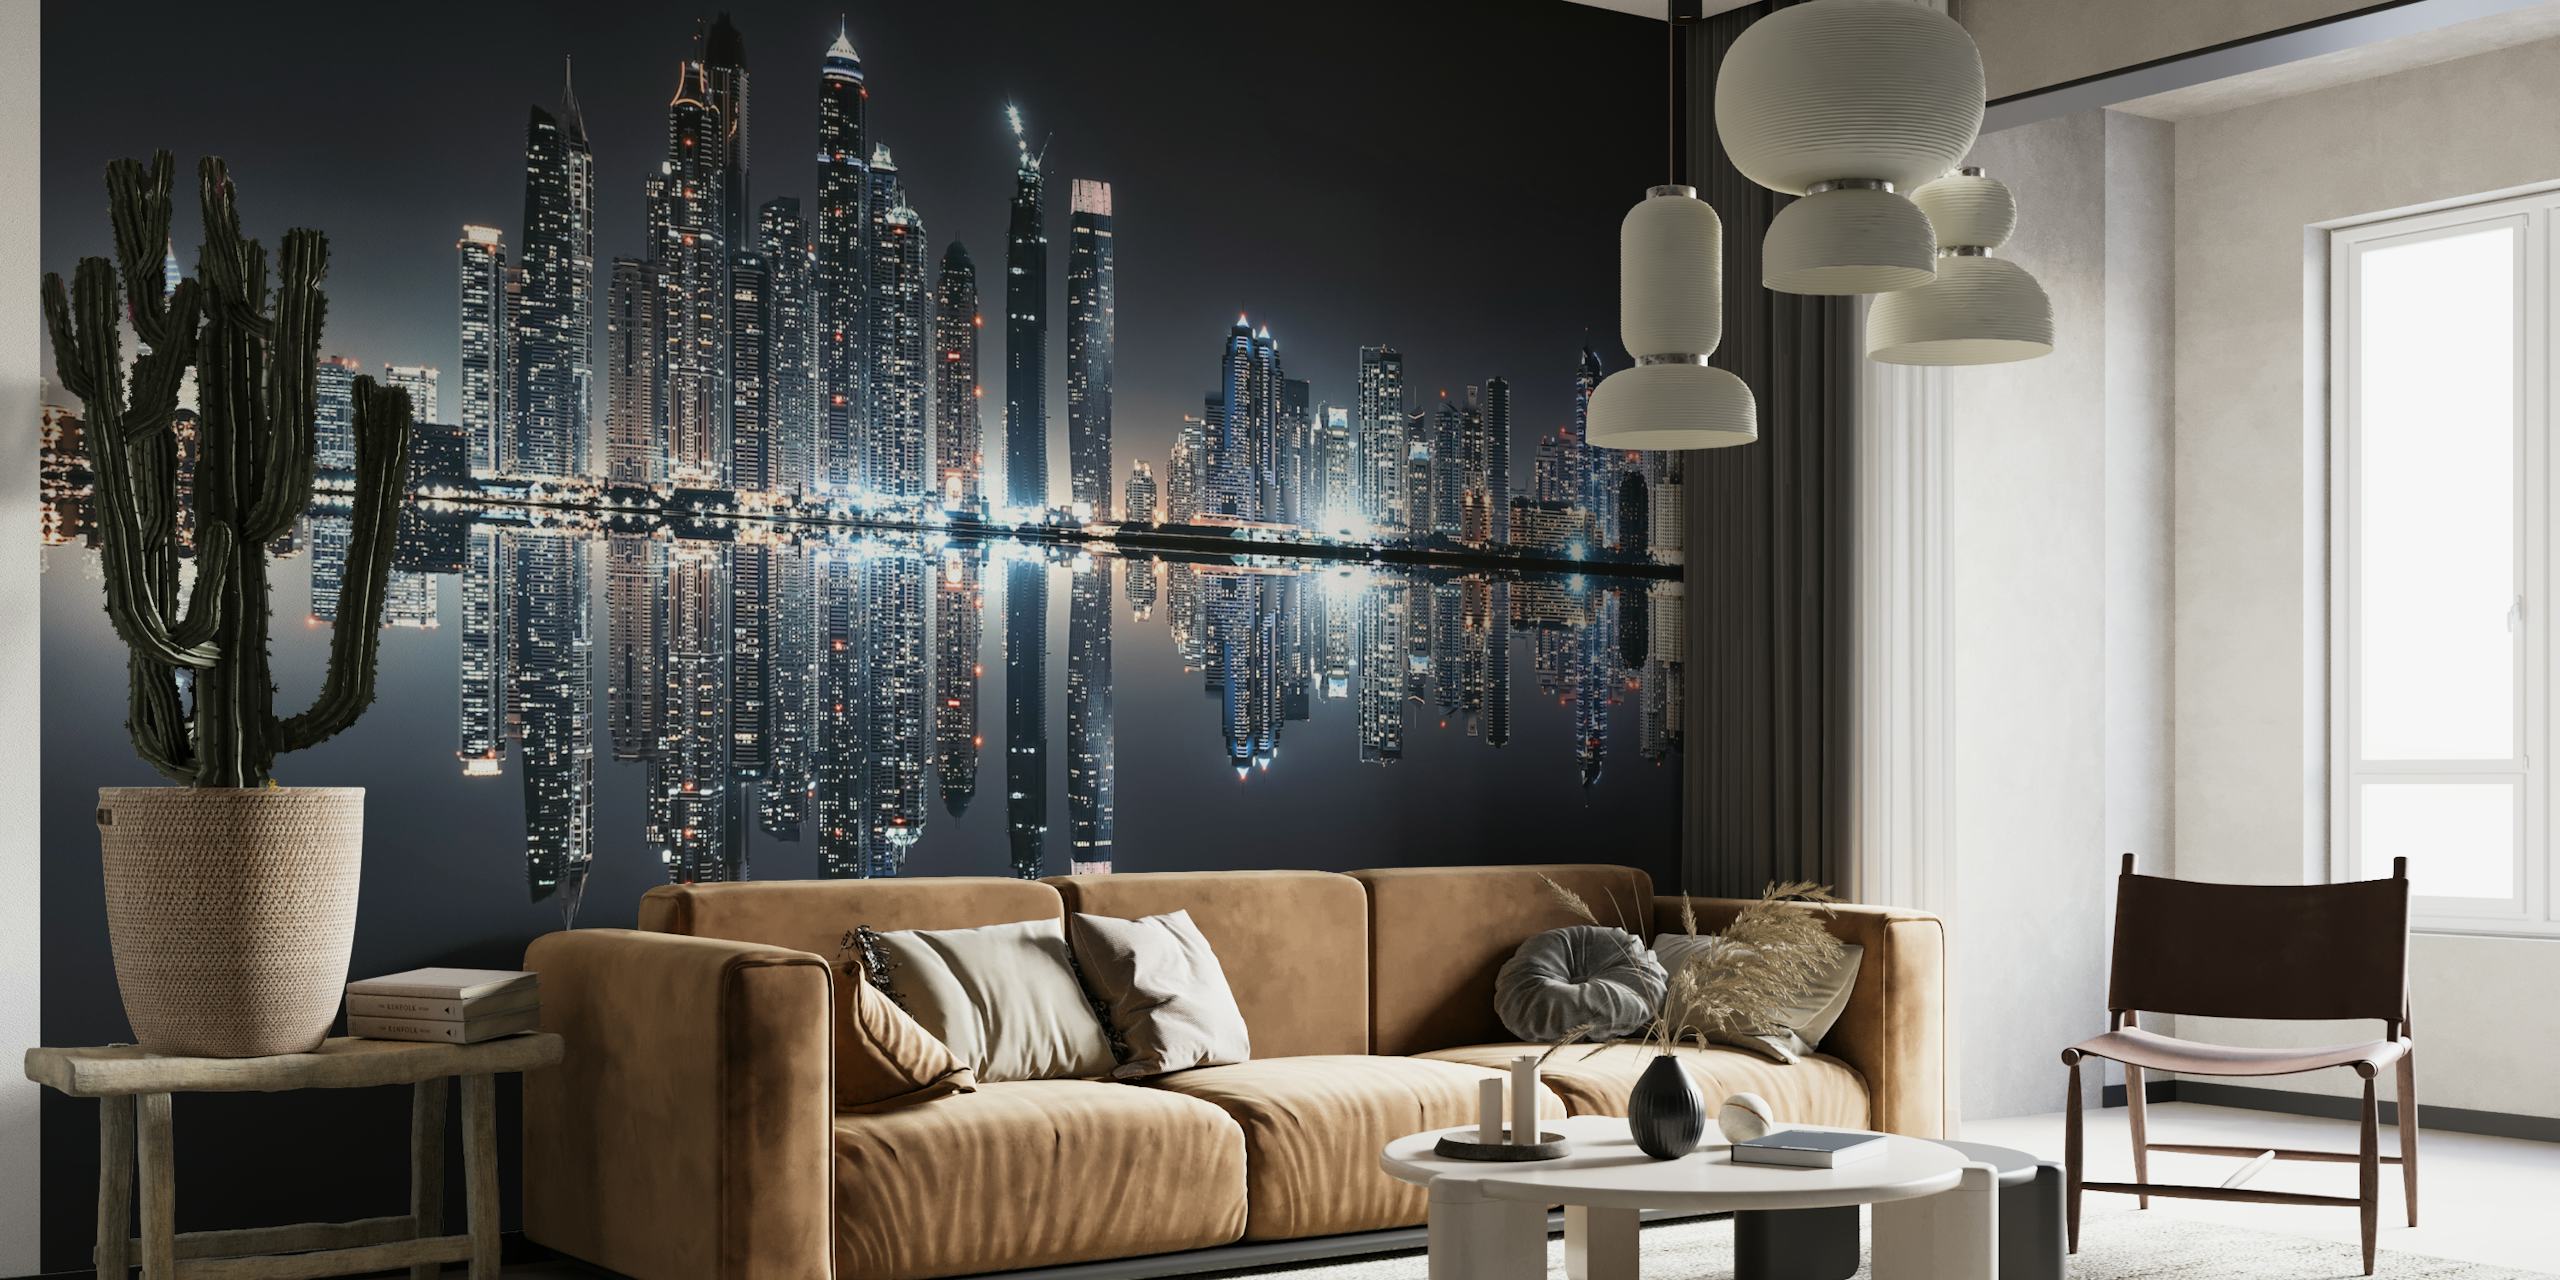 Dubai Marina skyline wall mural with nighttime city lights reflecting on water